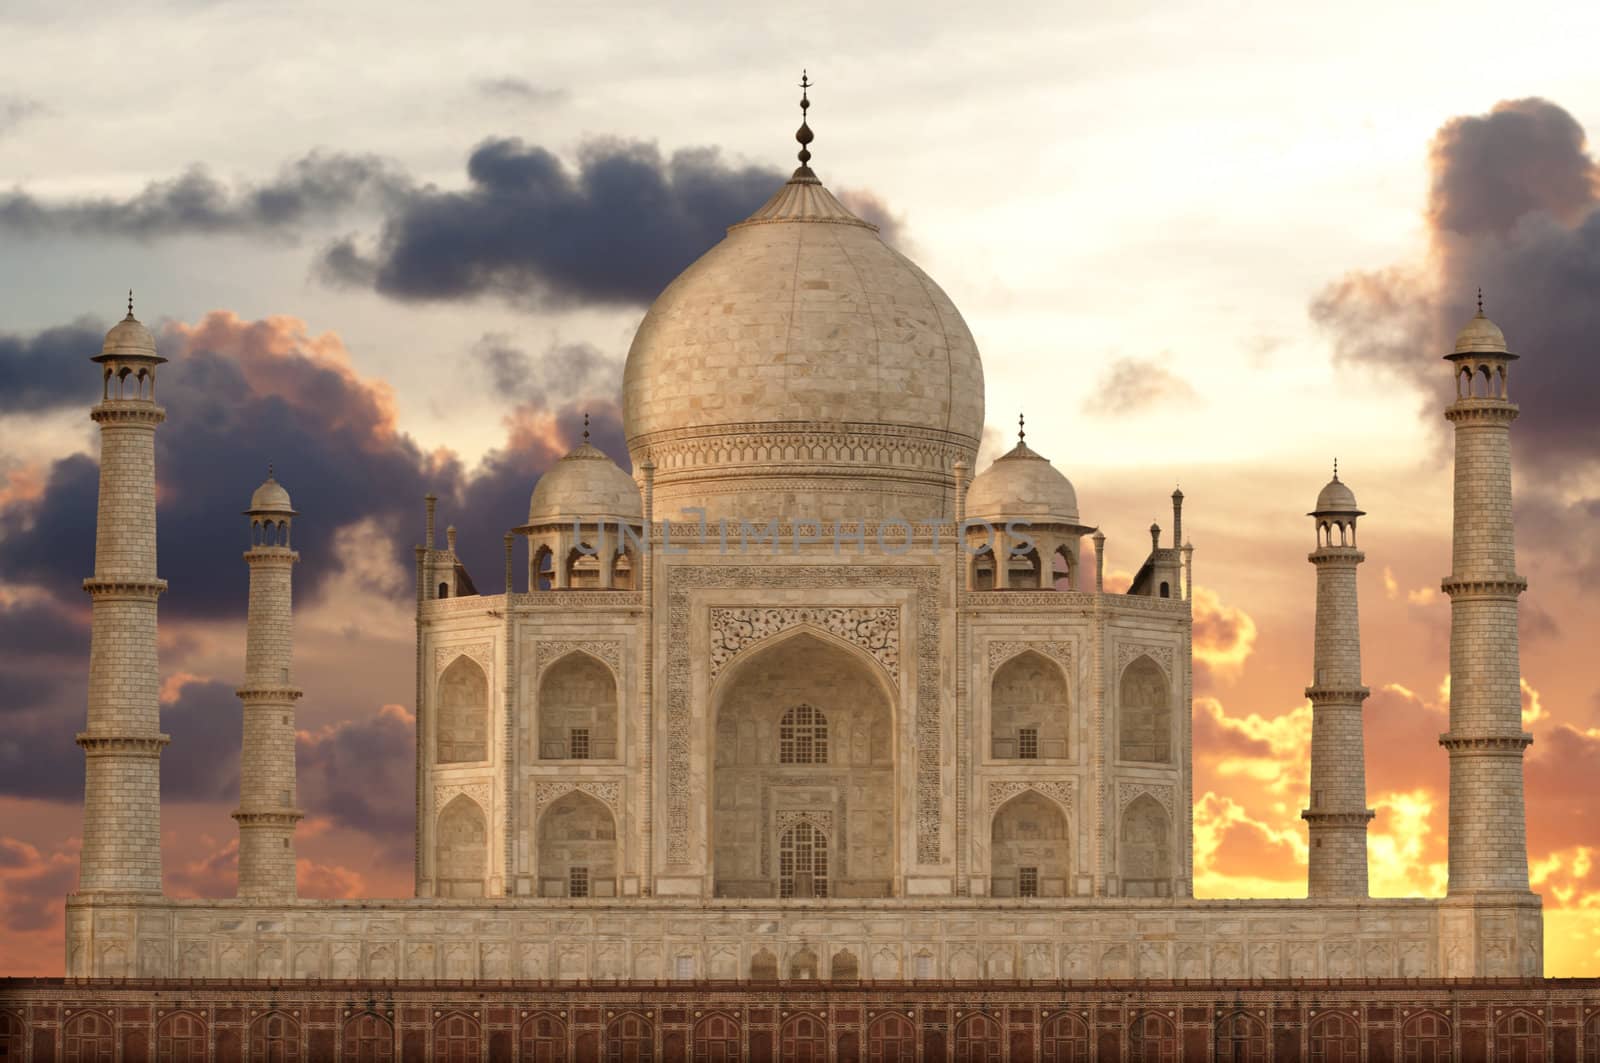 Sunset over Taj Mahal mausoleum by johnnychaos